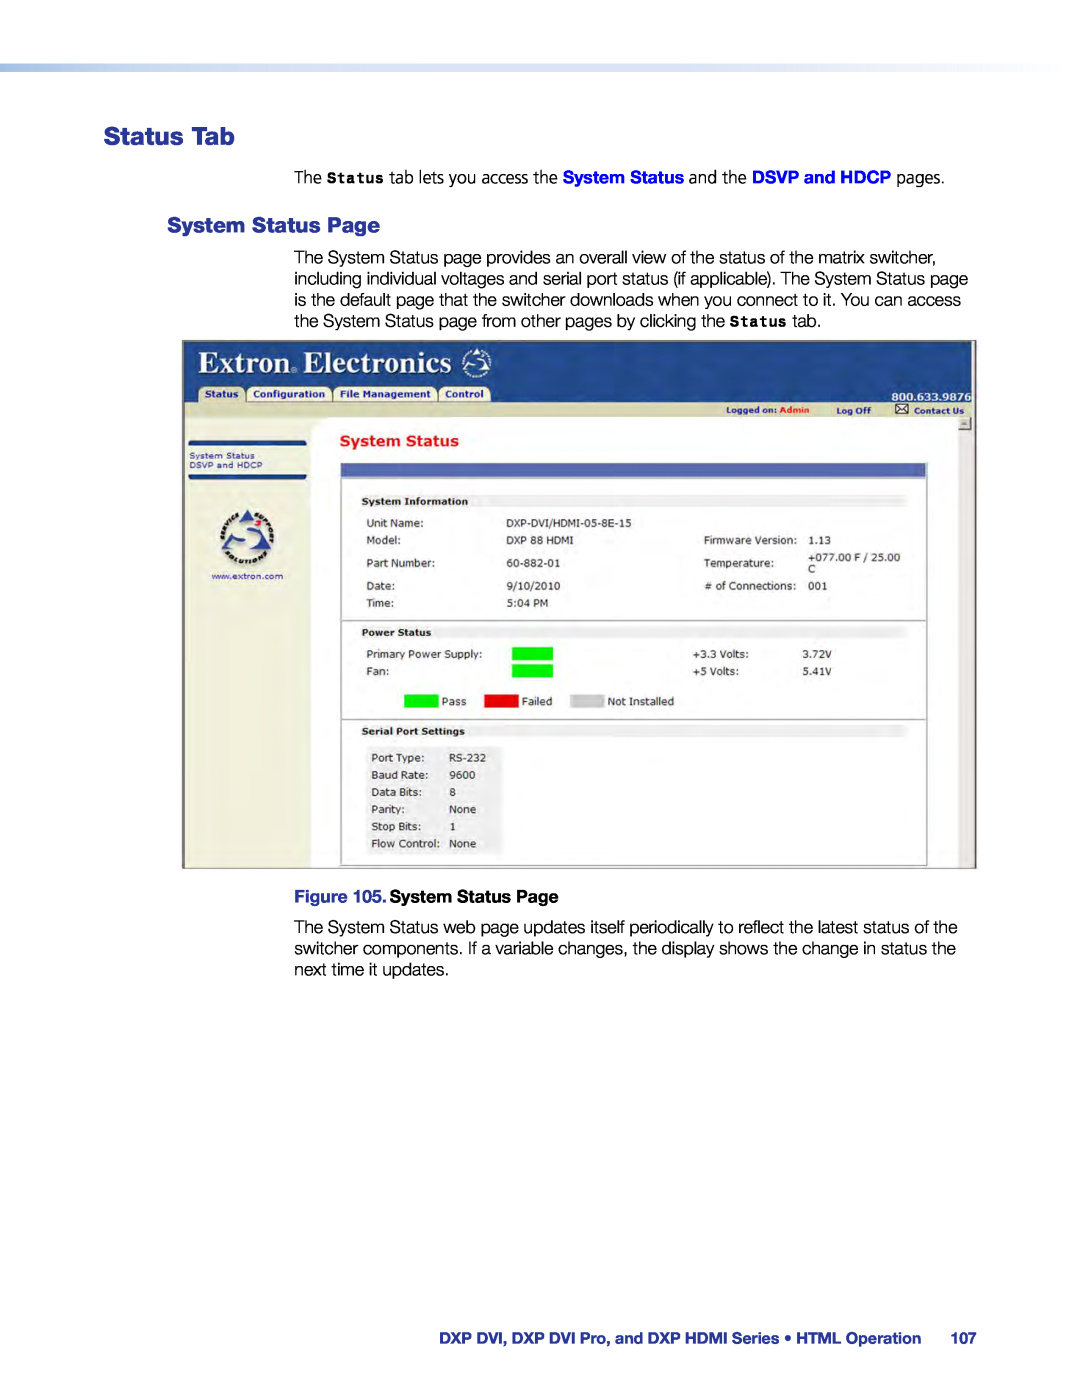 Extron electronic DXP DVI PRO manual Status Tab, System Status Page 